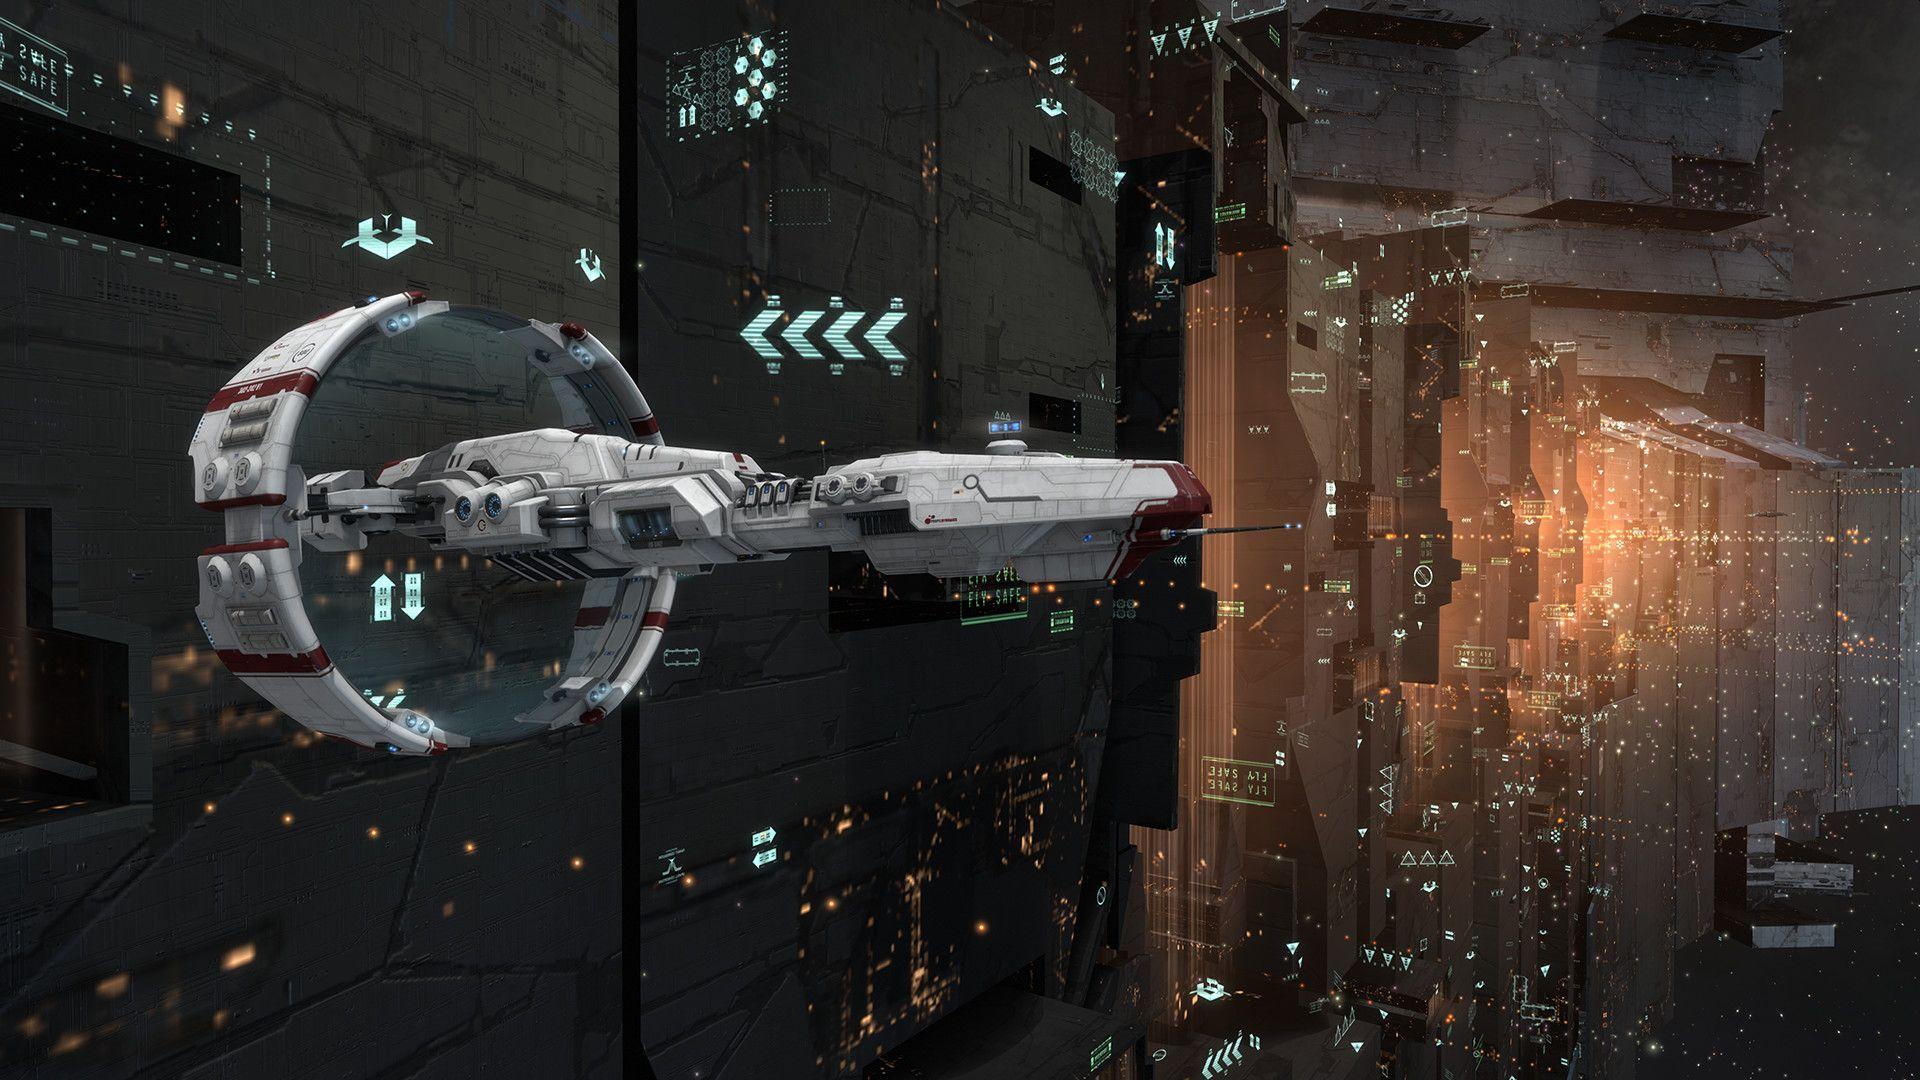 Space Combat – Play Star Wars Games Online